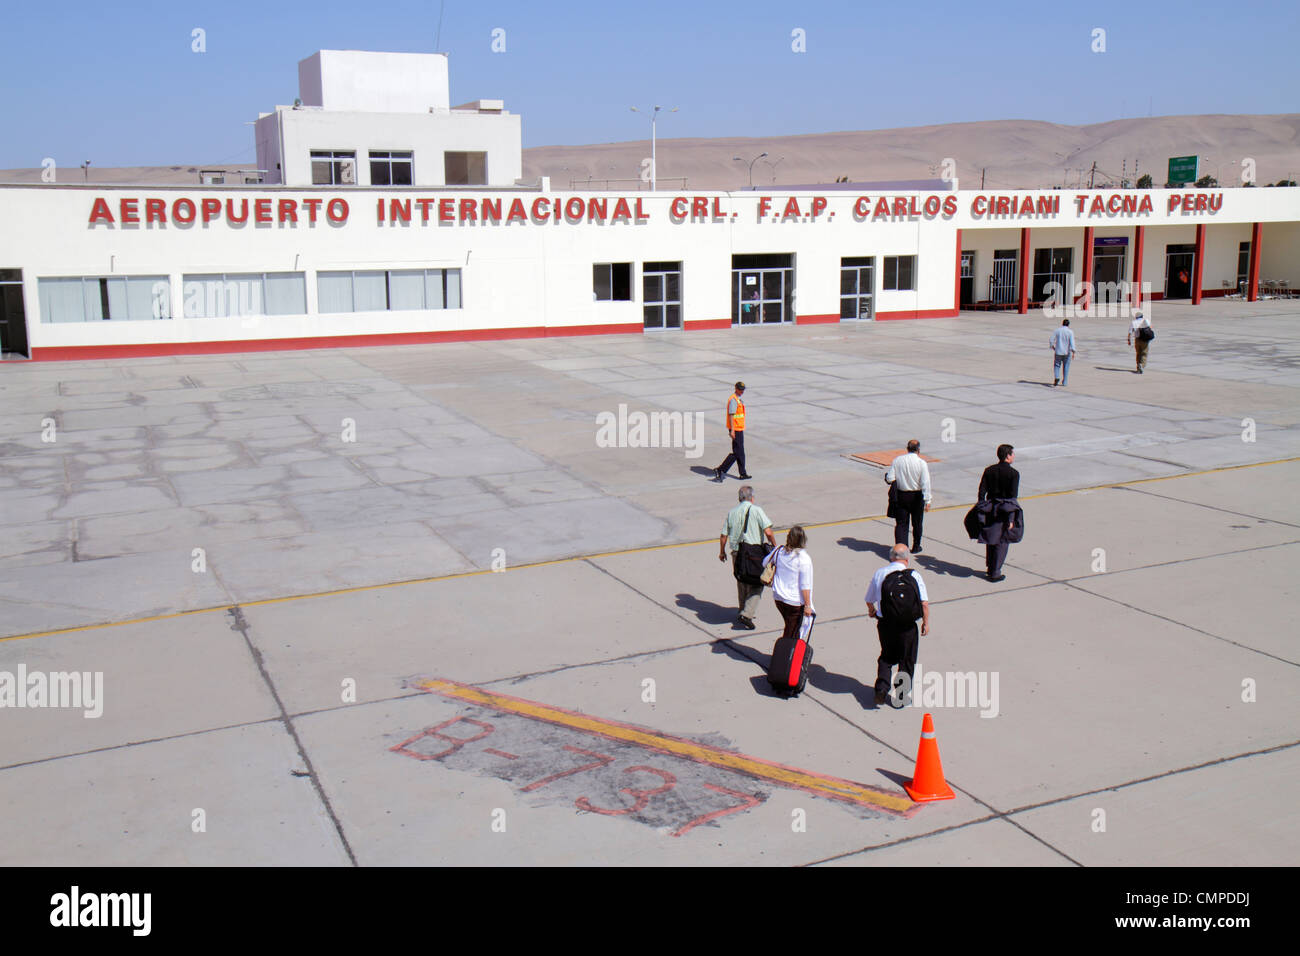 Tacna Peru,Aeropuerto Internacional Carlos Ciriani,aéroport,aviation,terminal bâtiment,LAN vol de Lima,arrivée,tarmac,hispanique homme hommes, femme Banque D'Images